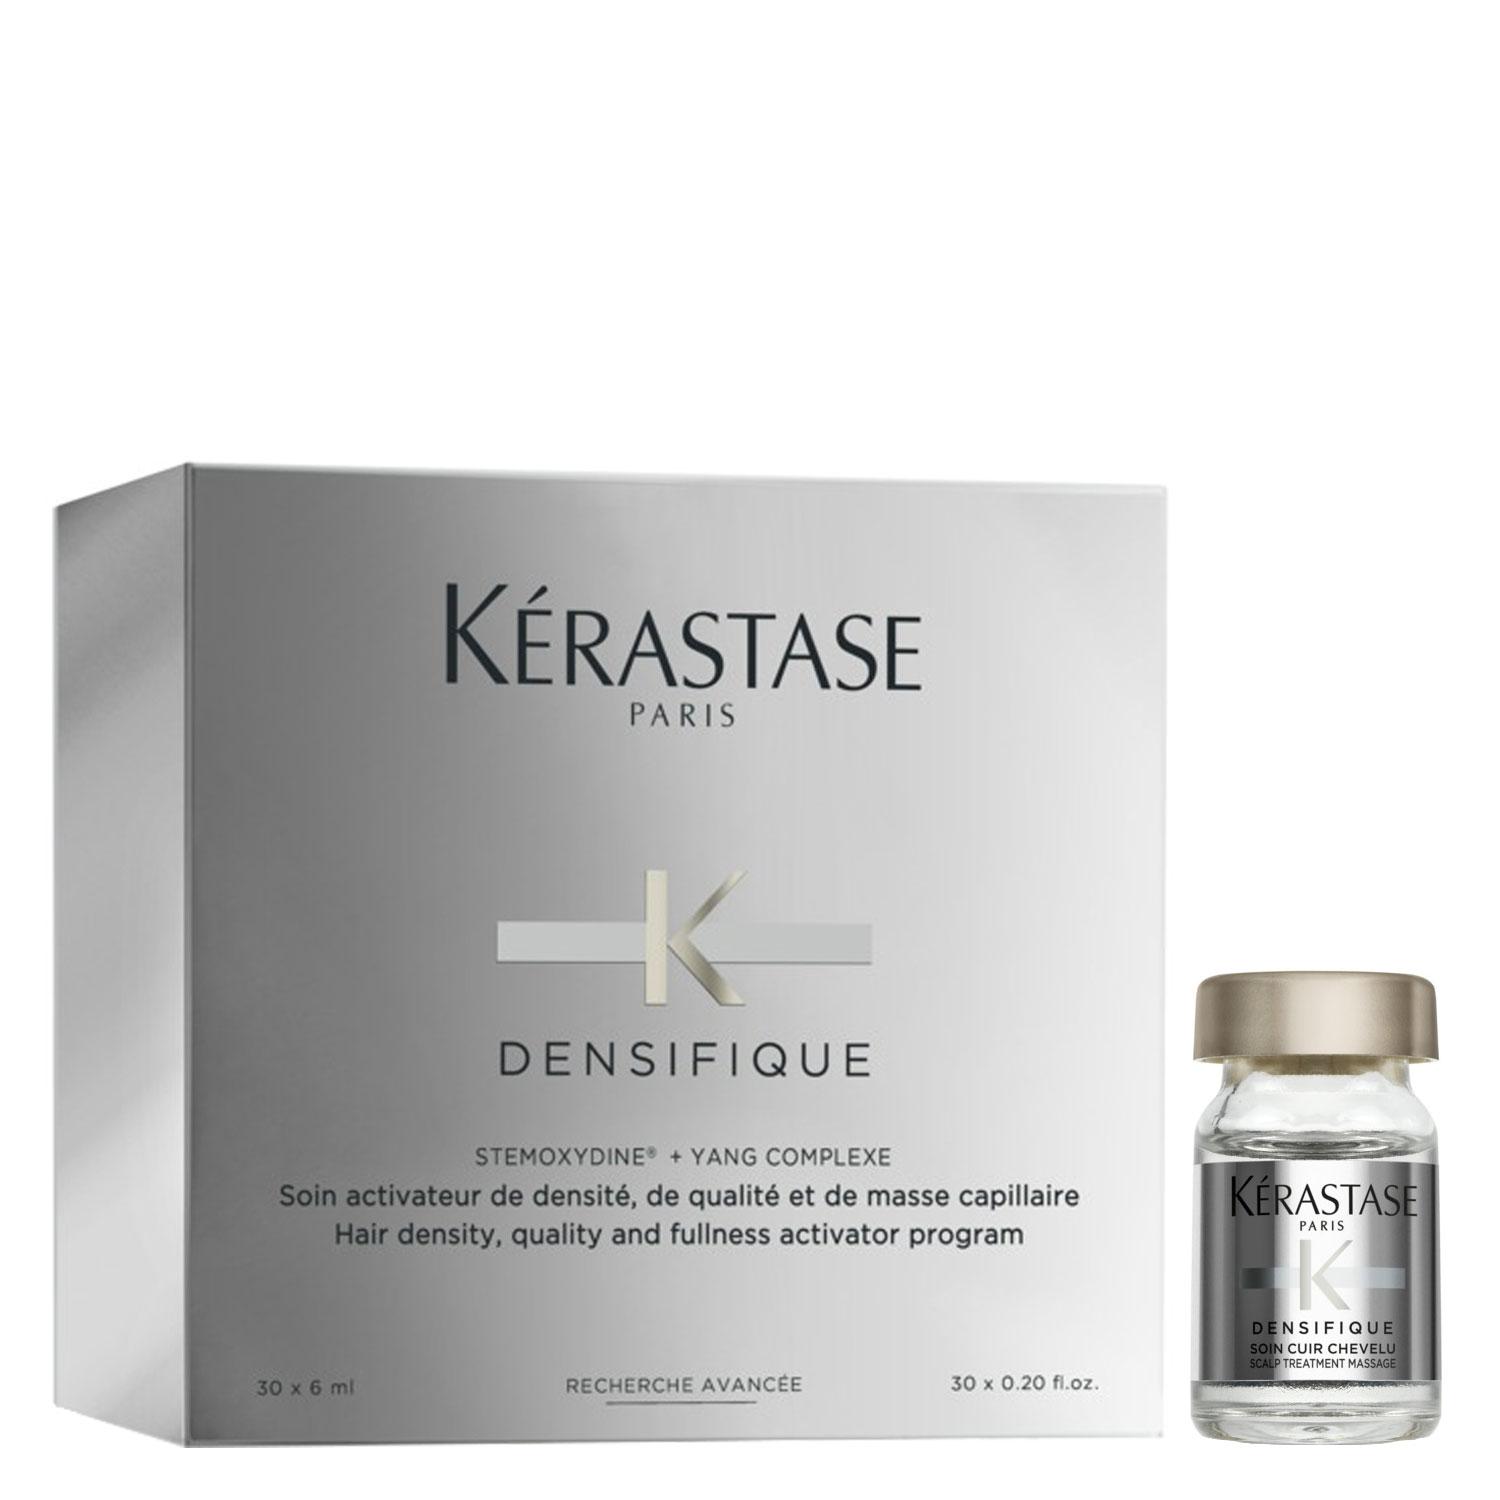 Densifique - Hair Density Programme